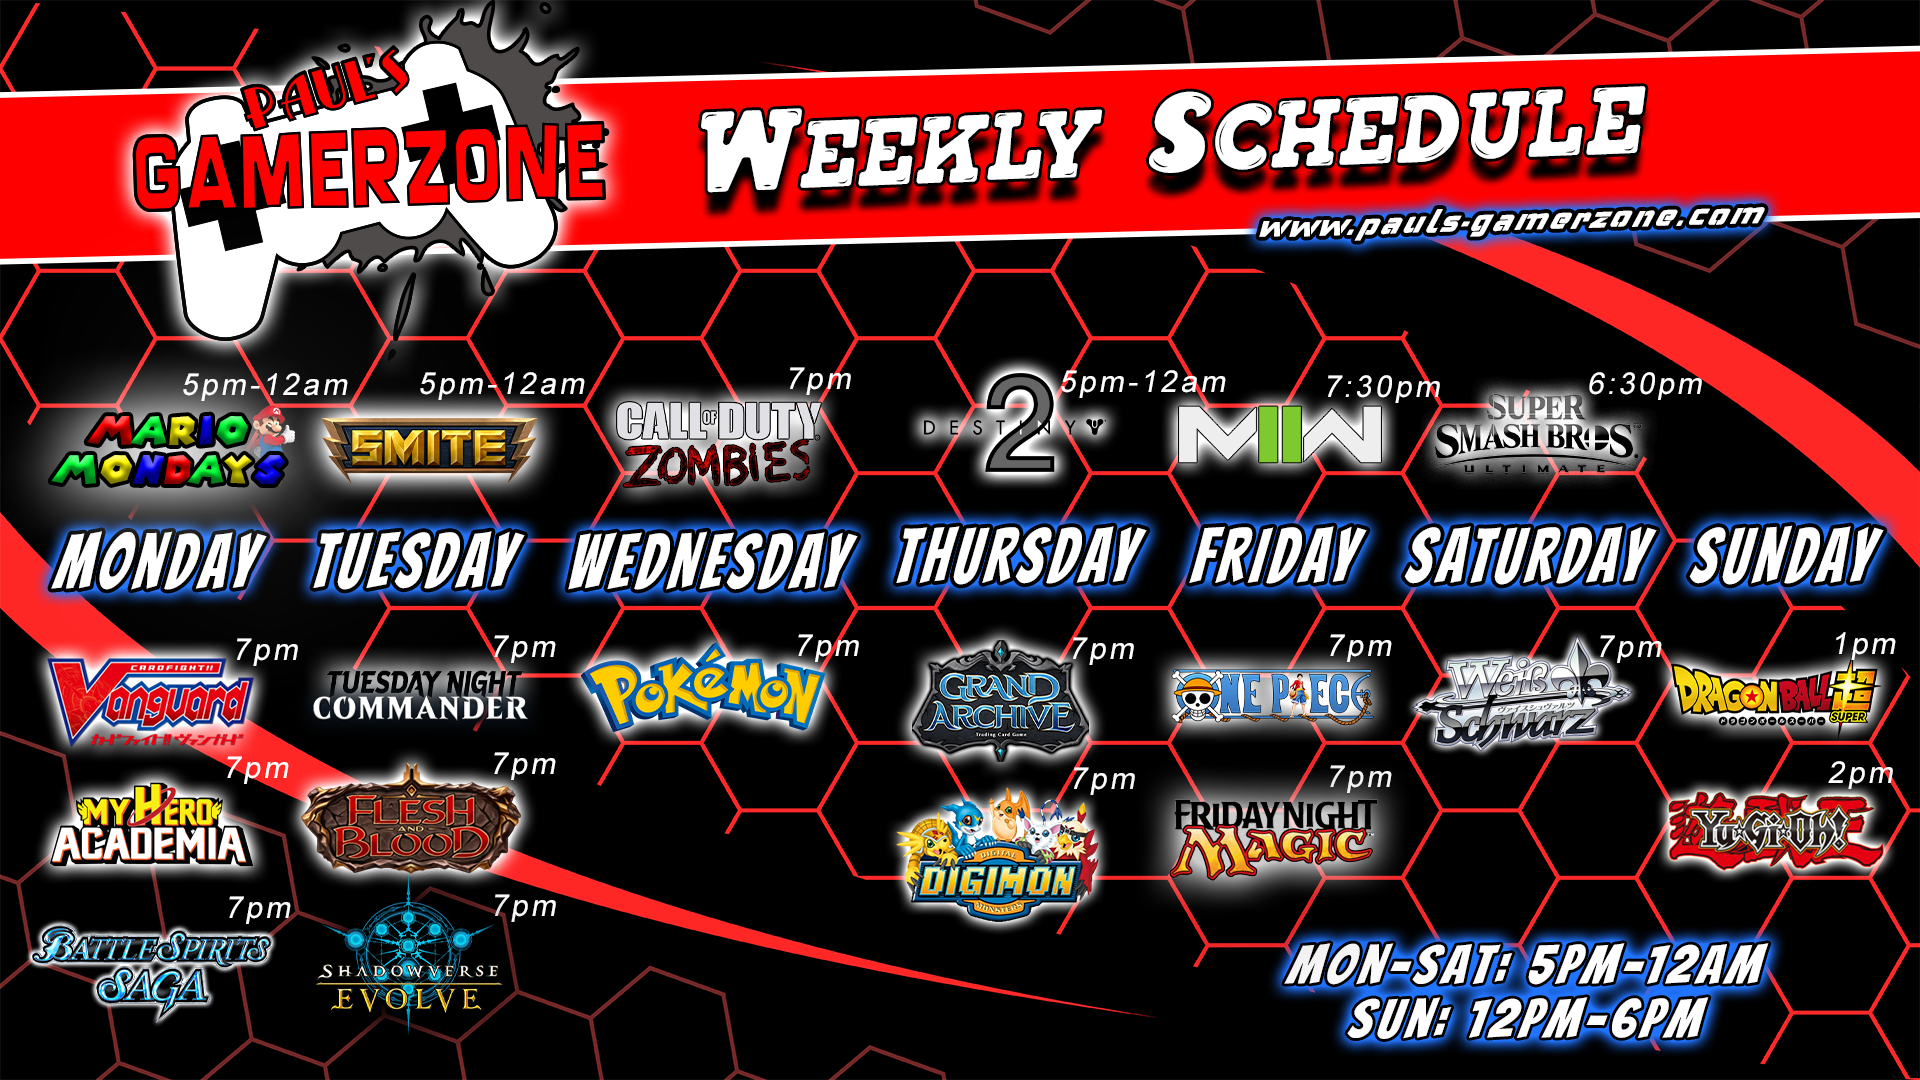 Paul's Gamerzone Weekly Schedule